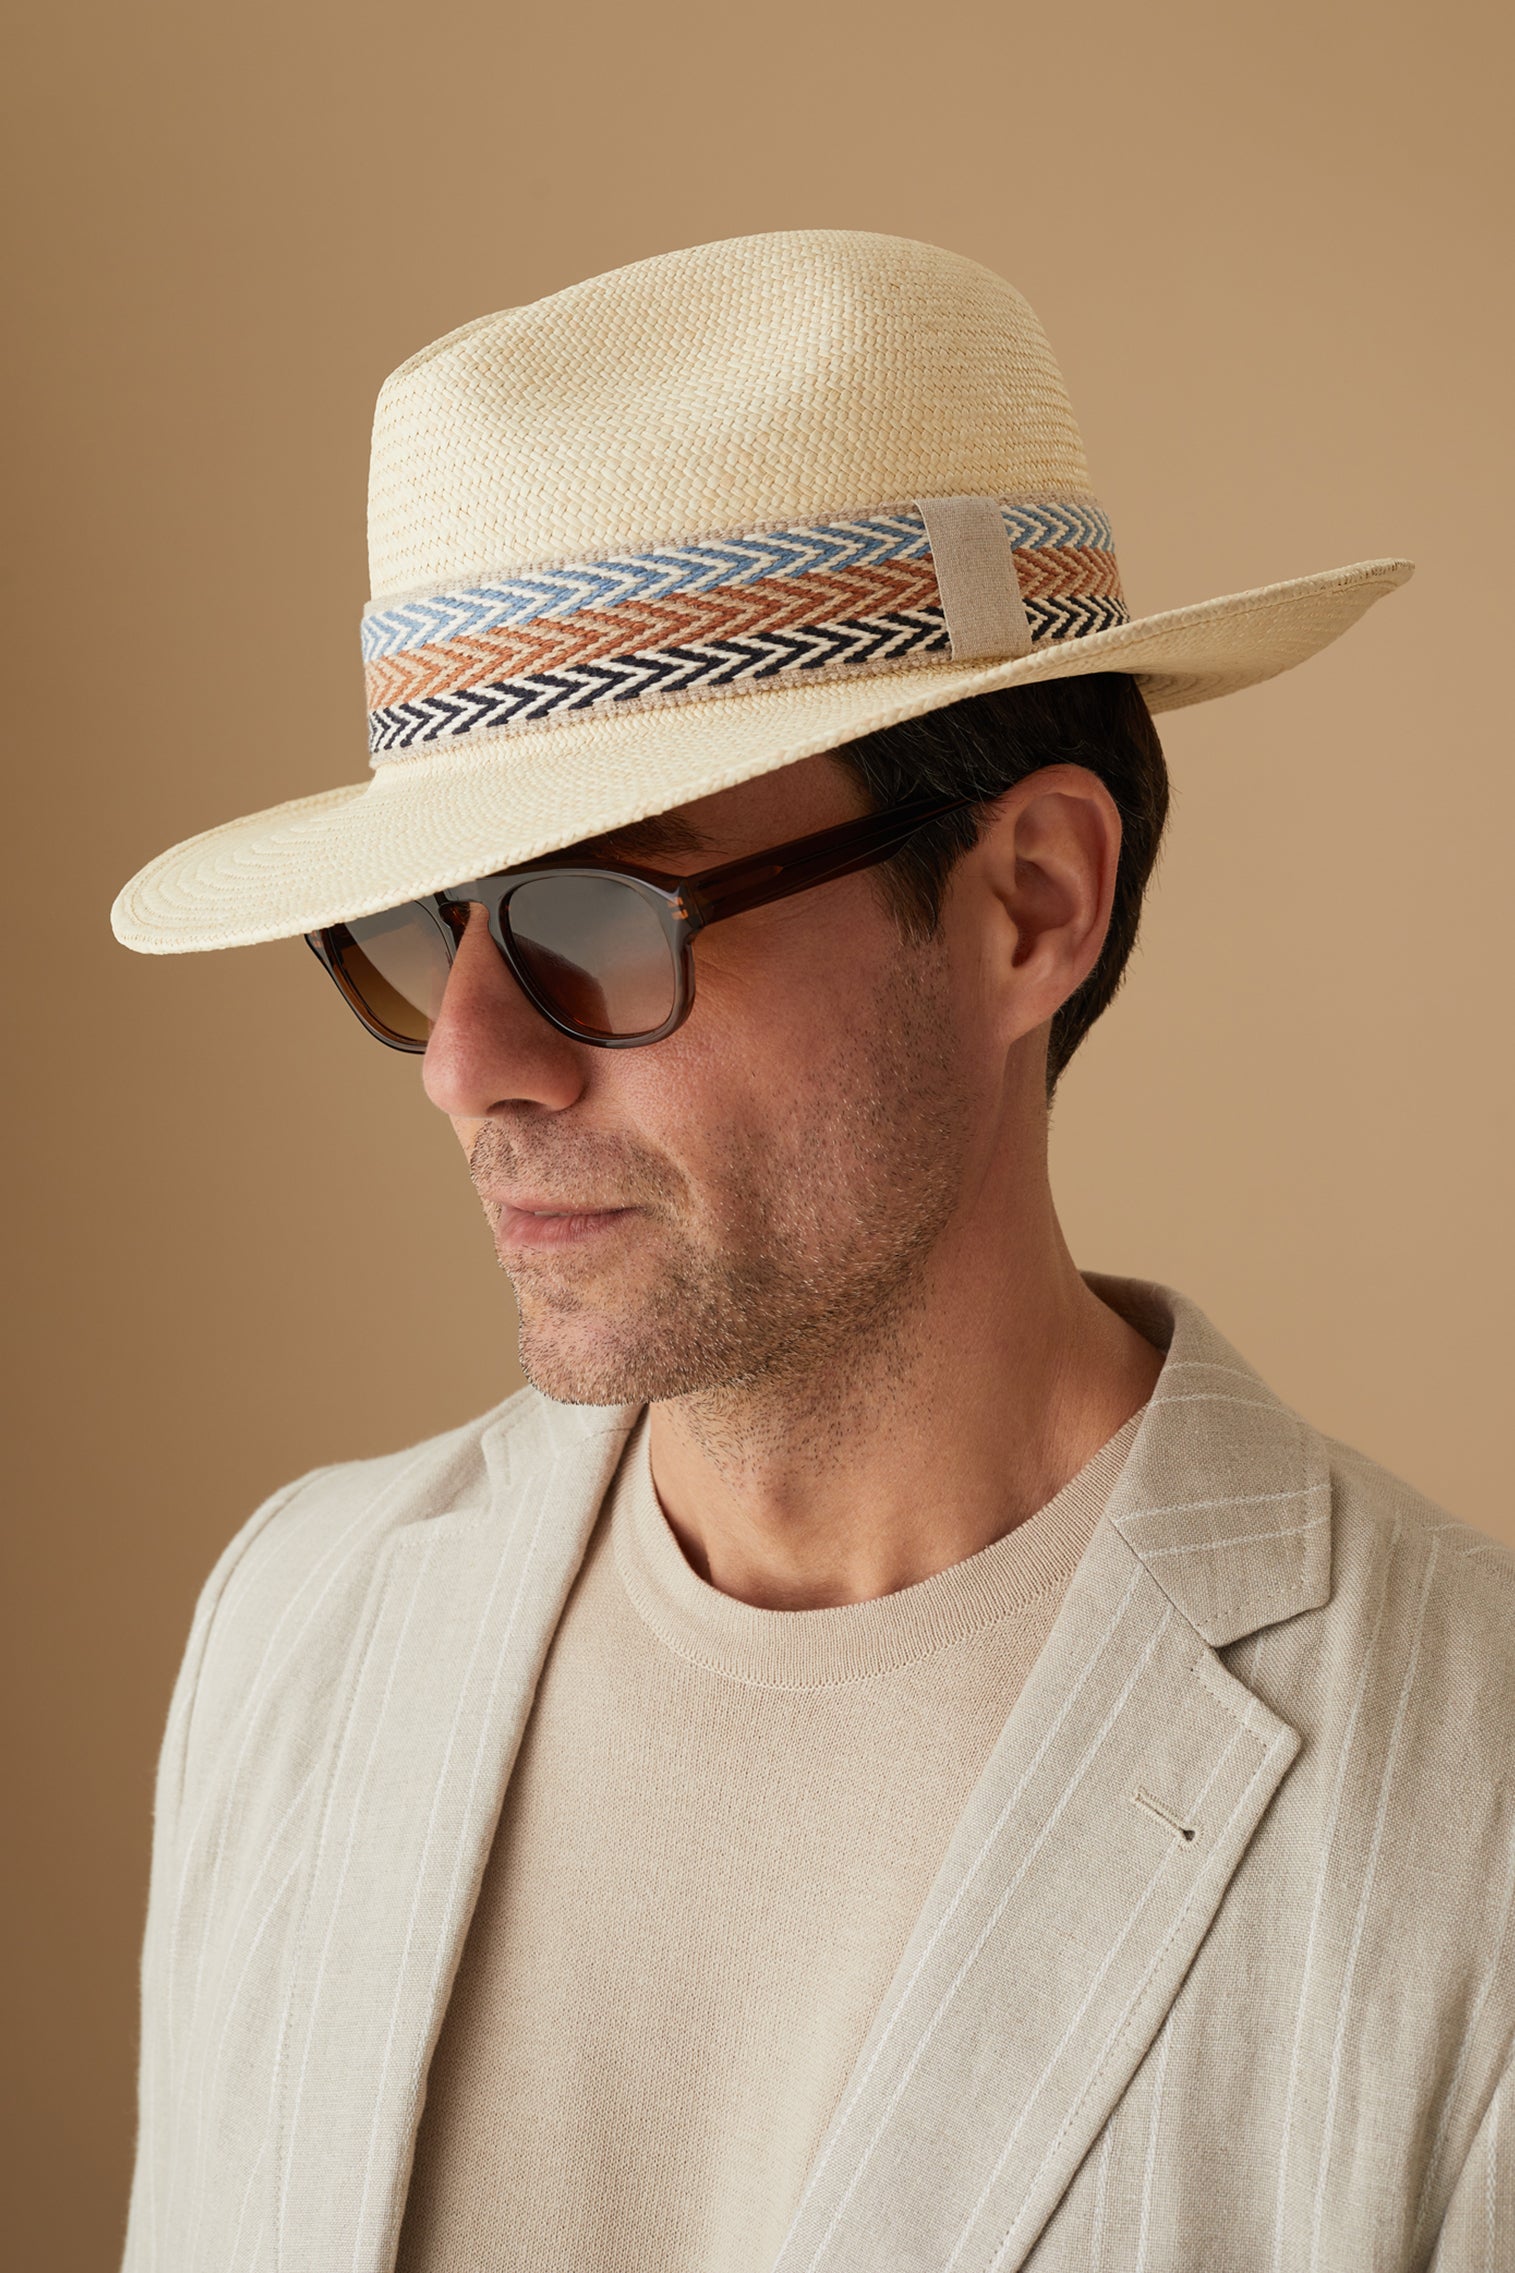 Walter Panama - Panamas, Straw and Sun Hats for Men - Lock & Co. Hatters London UK